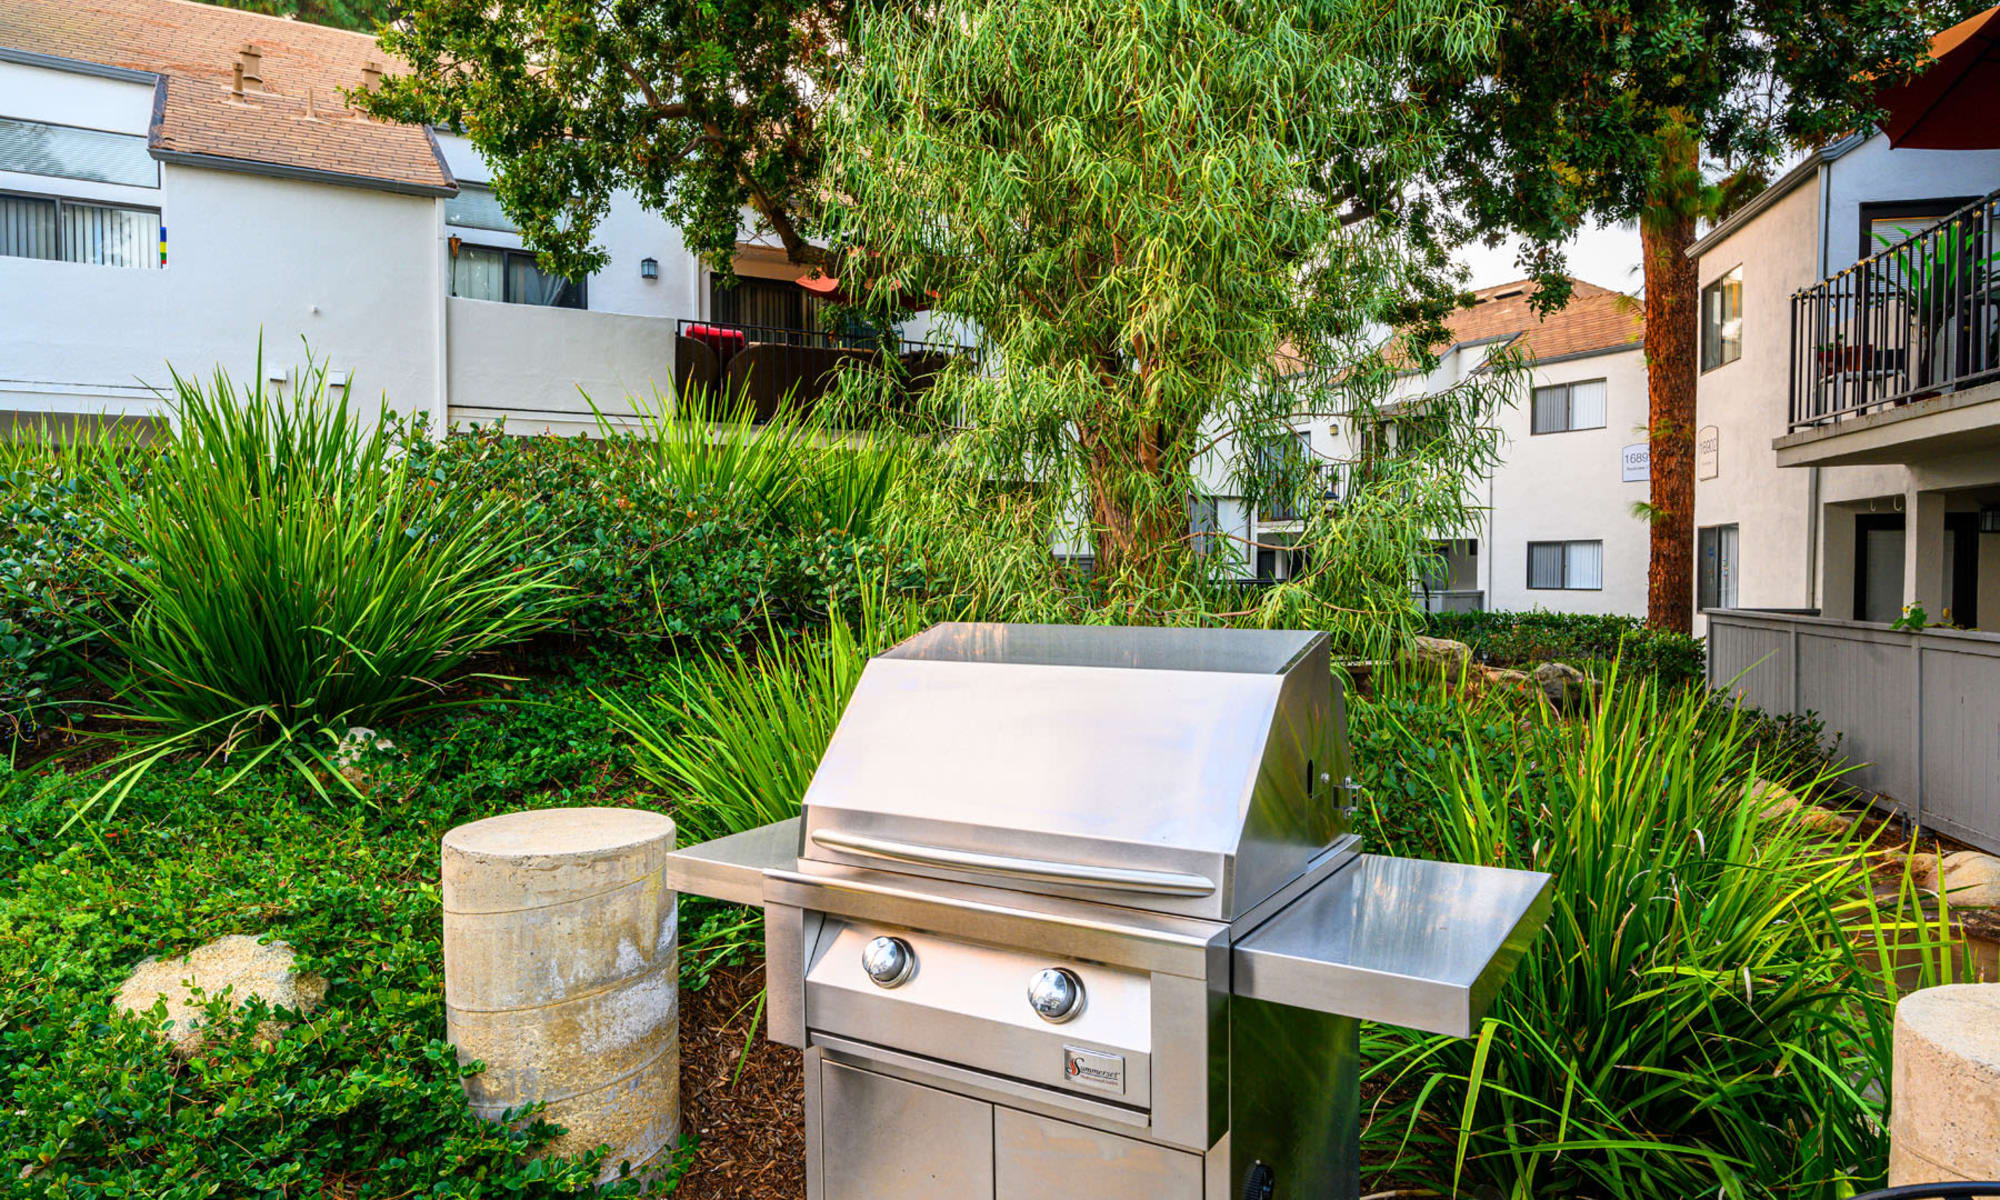 Barbecue area with a gas grill at Pleasanton Place Apartment Homes in Pleasanton, California